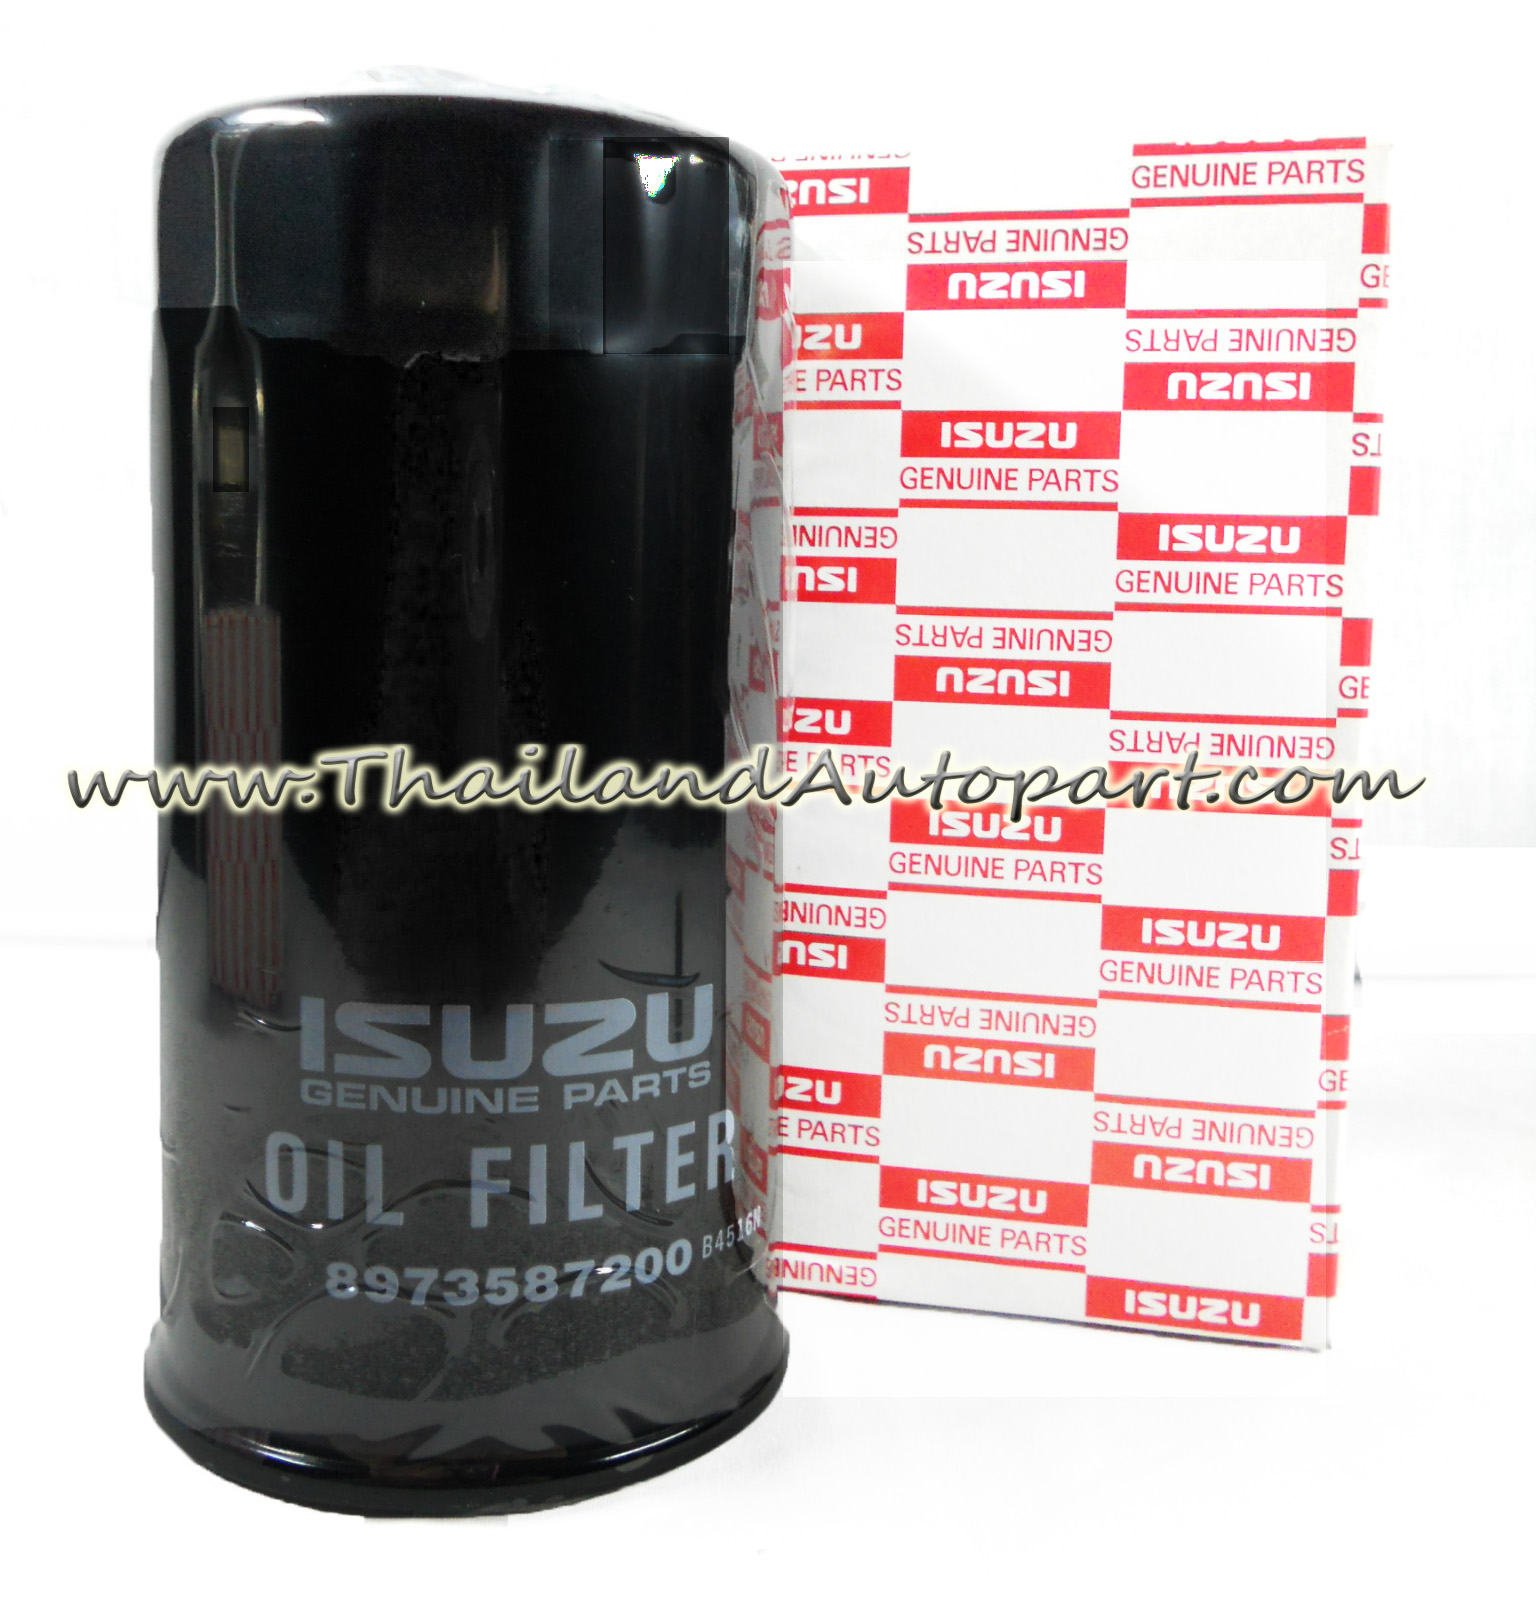 OIL FILTERS FOR ISUZU DMAX 05-12, GOLD SERIES, PLATINUM